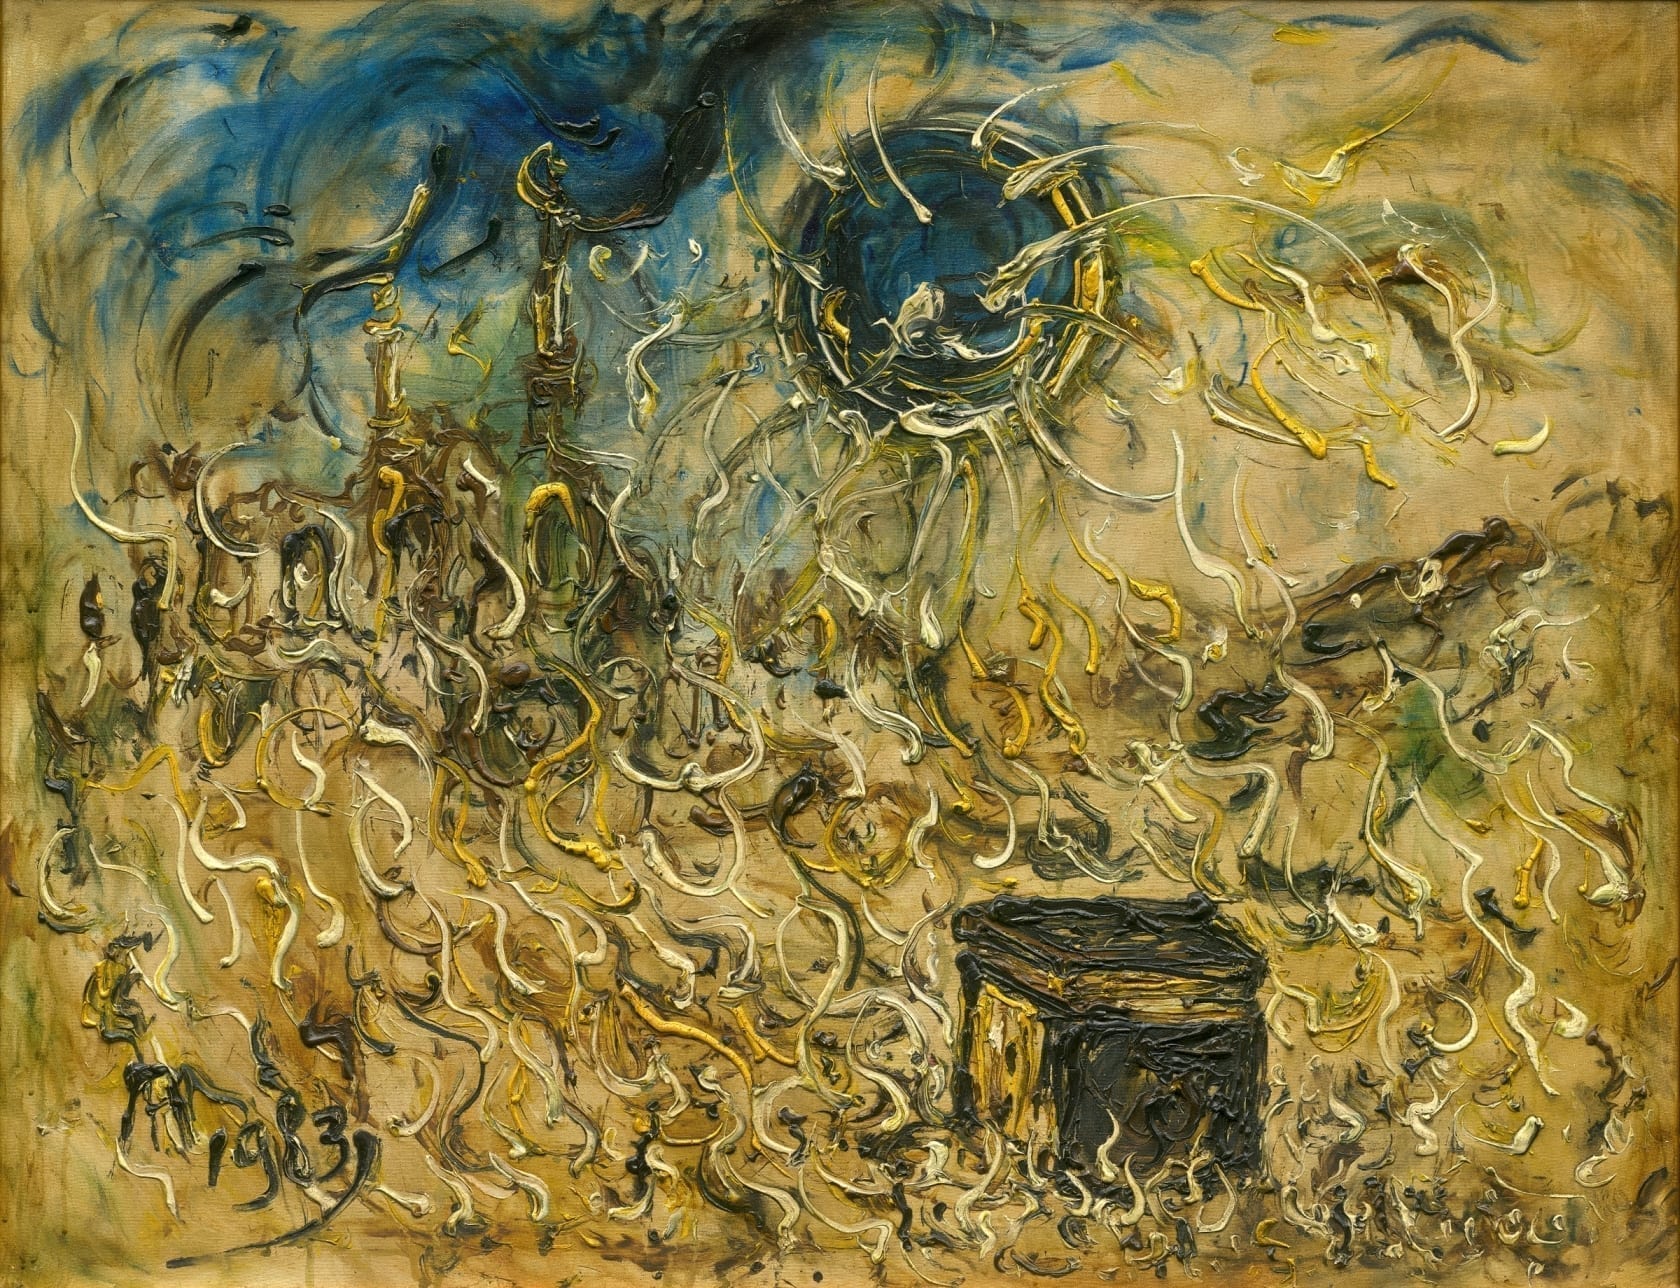 Affandi (Indonesian, 1907-1990) Ka’abah (link) 1983, oil on canvas 100 x 125 cm Estimate: HK$ 800,000 - 1,200,000